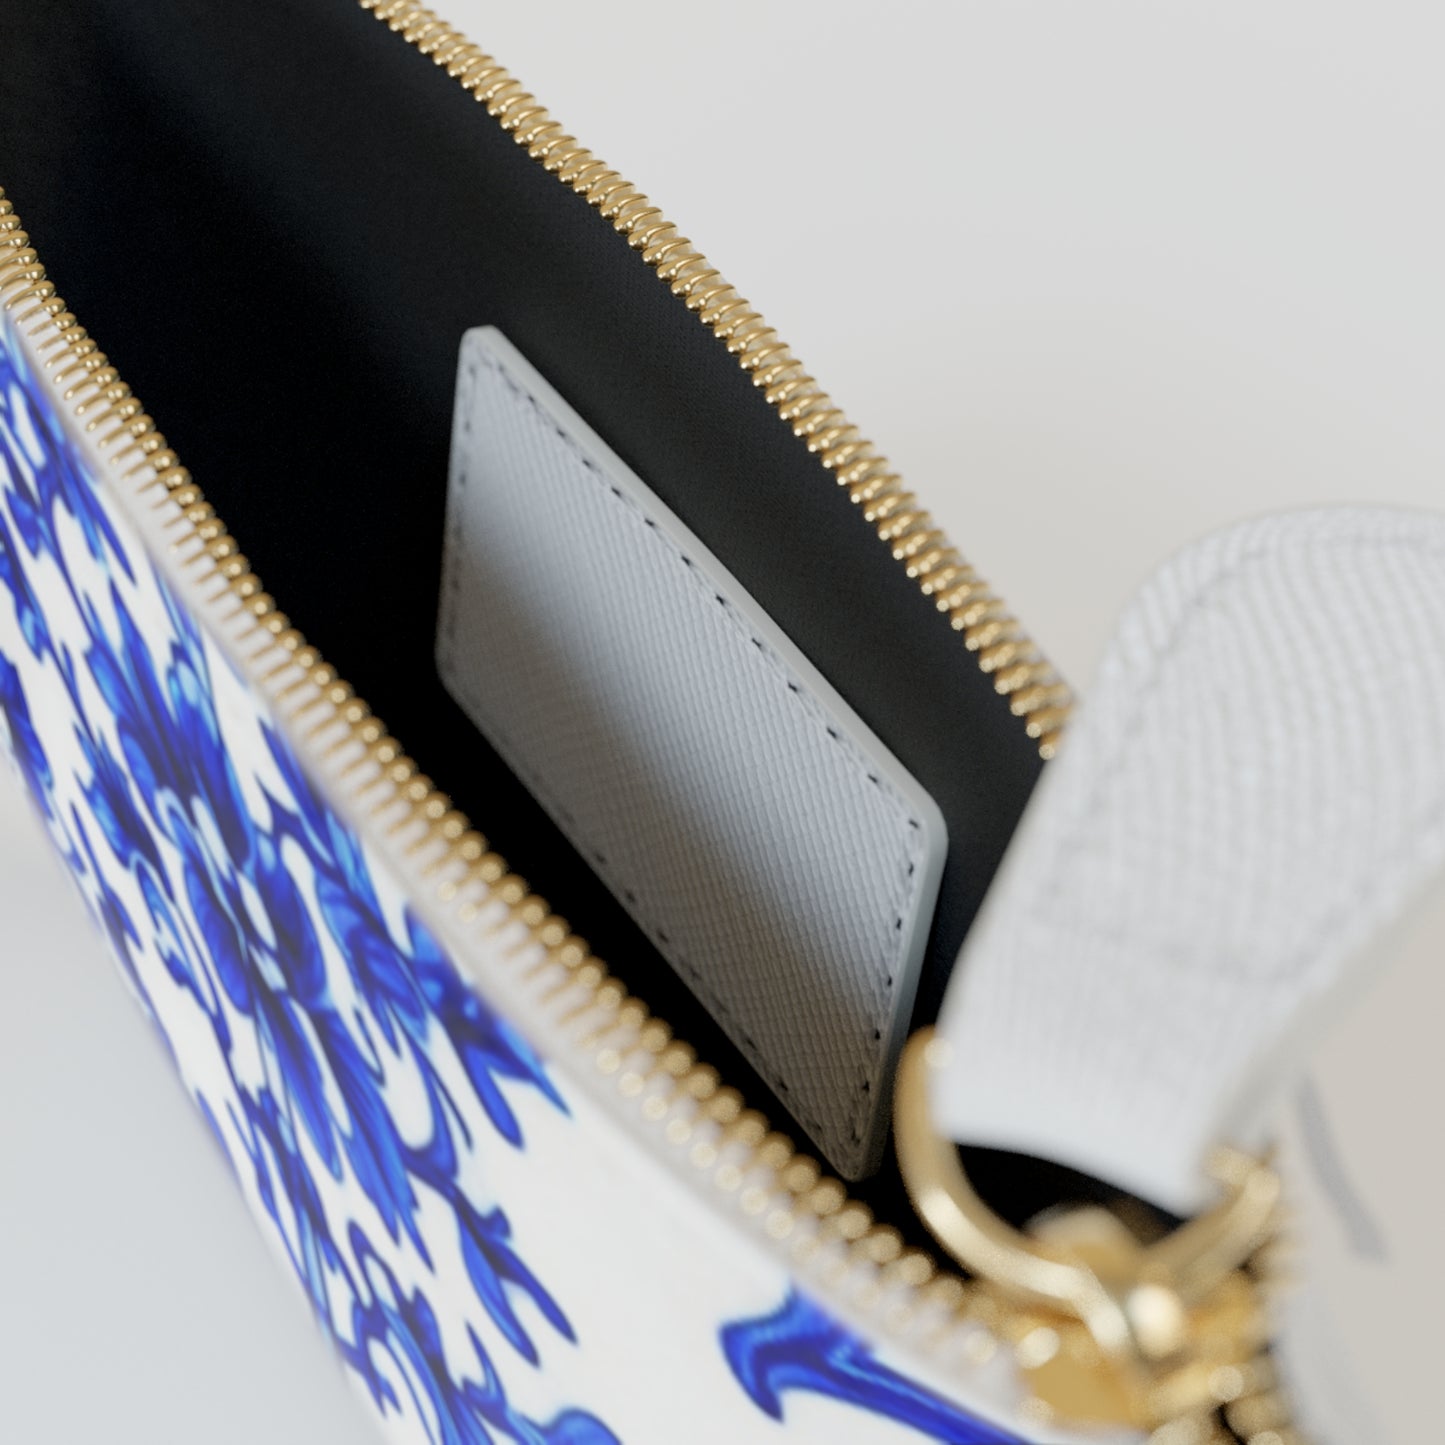 Portuguese Blue and White Tile Pattern Coin Purse Lipstick Mini Pouch Clutch Bag